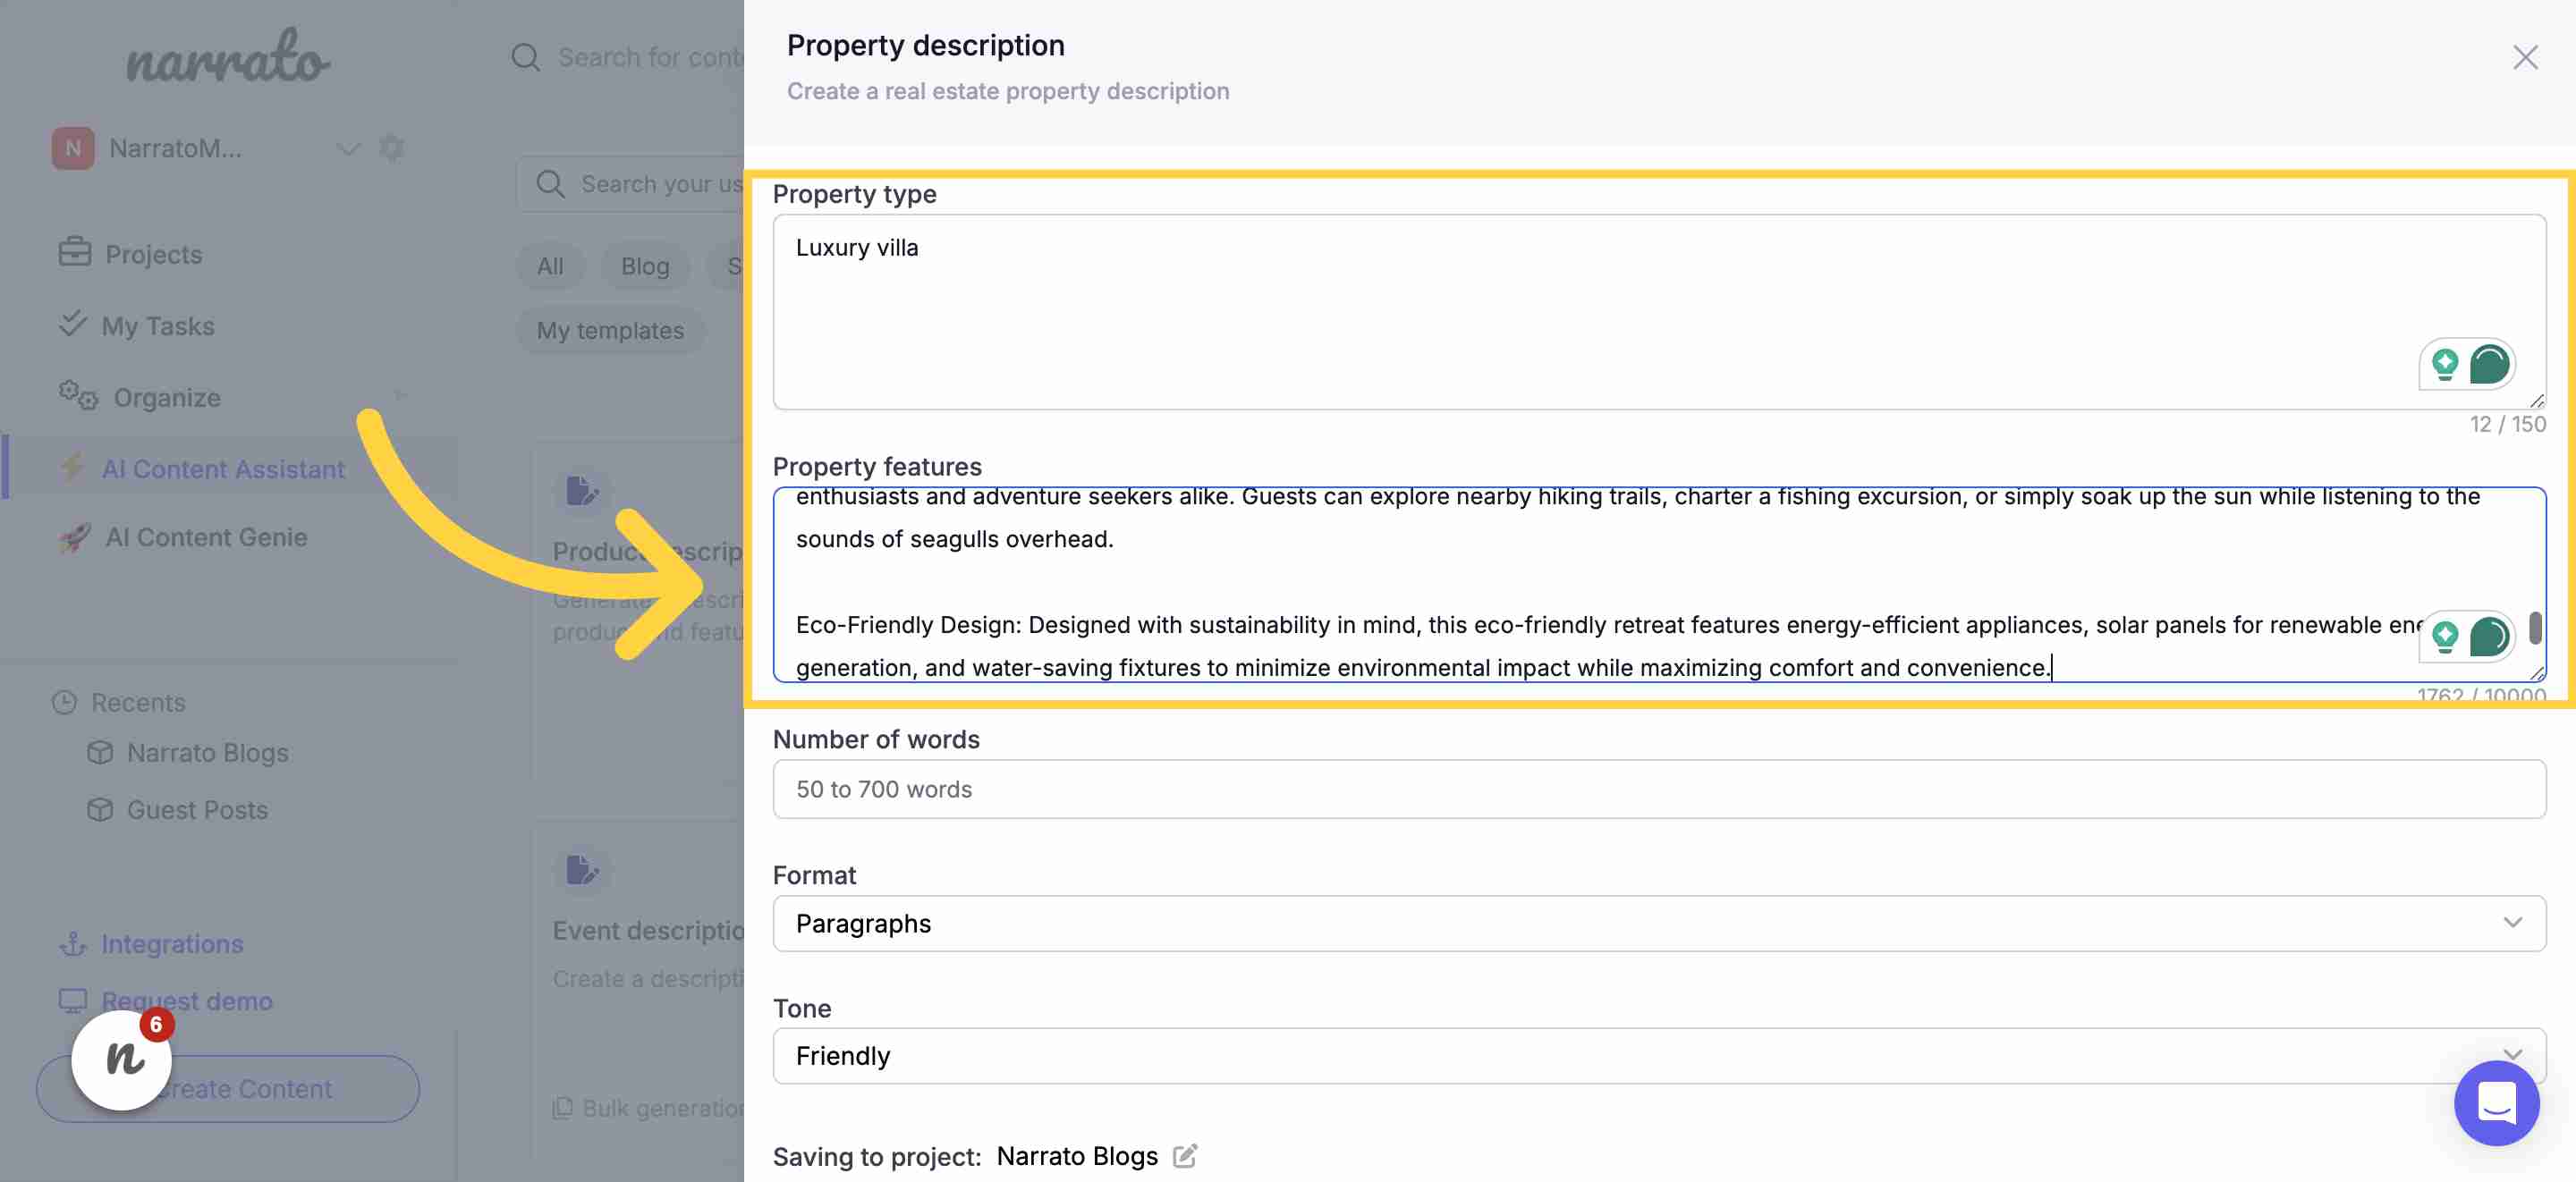 Providing relevant property details to the AI property description generator